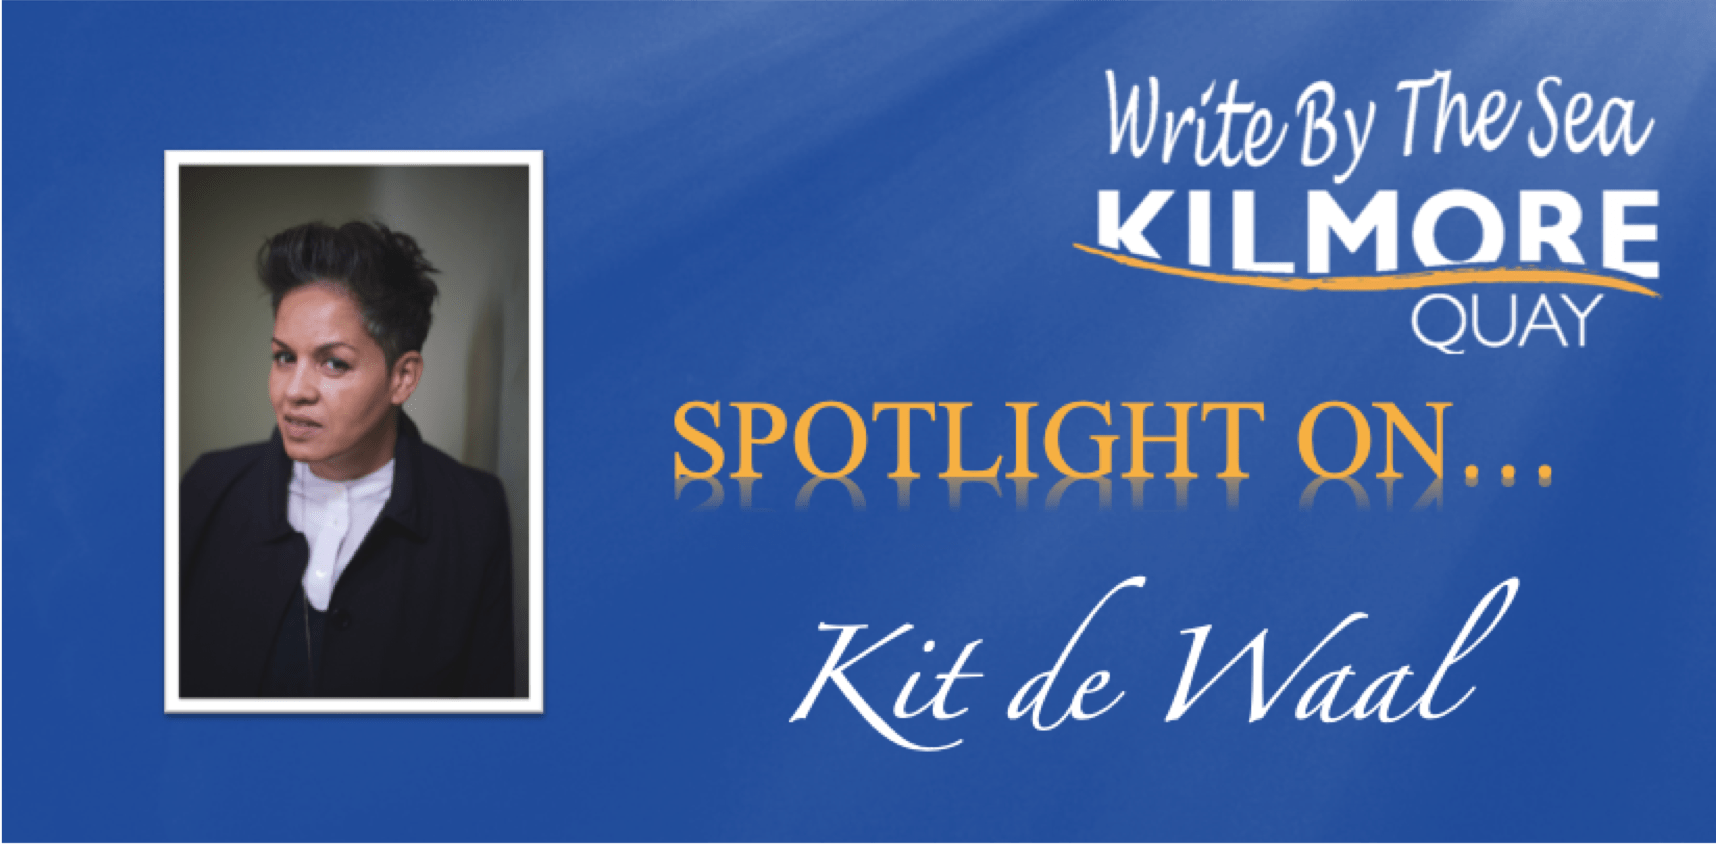 Spotlight on Kit de Waal